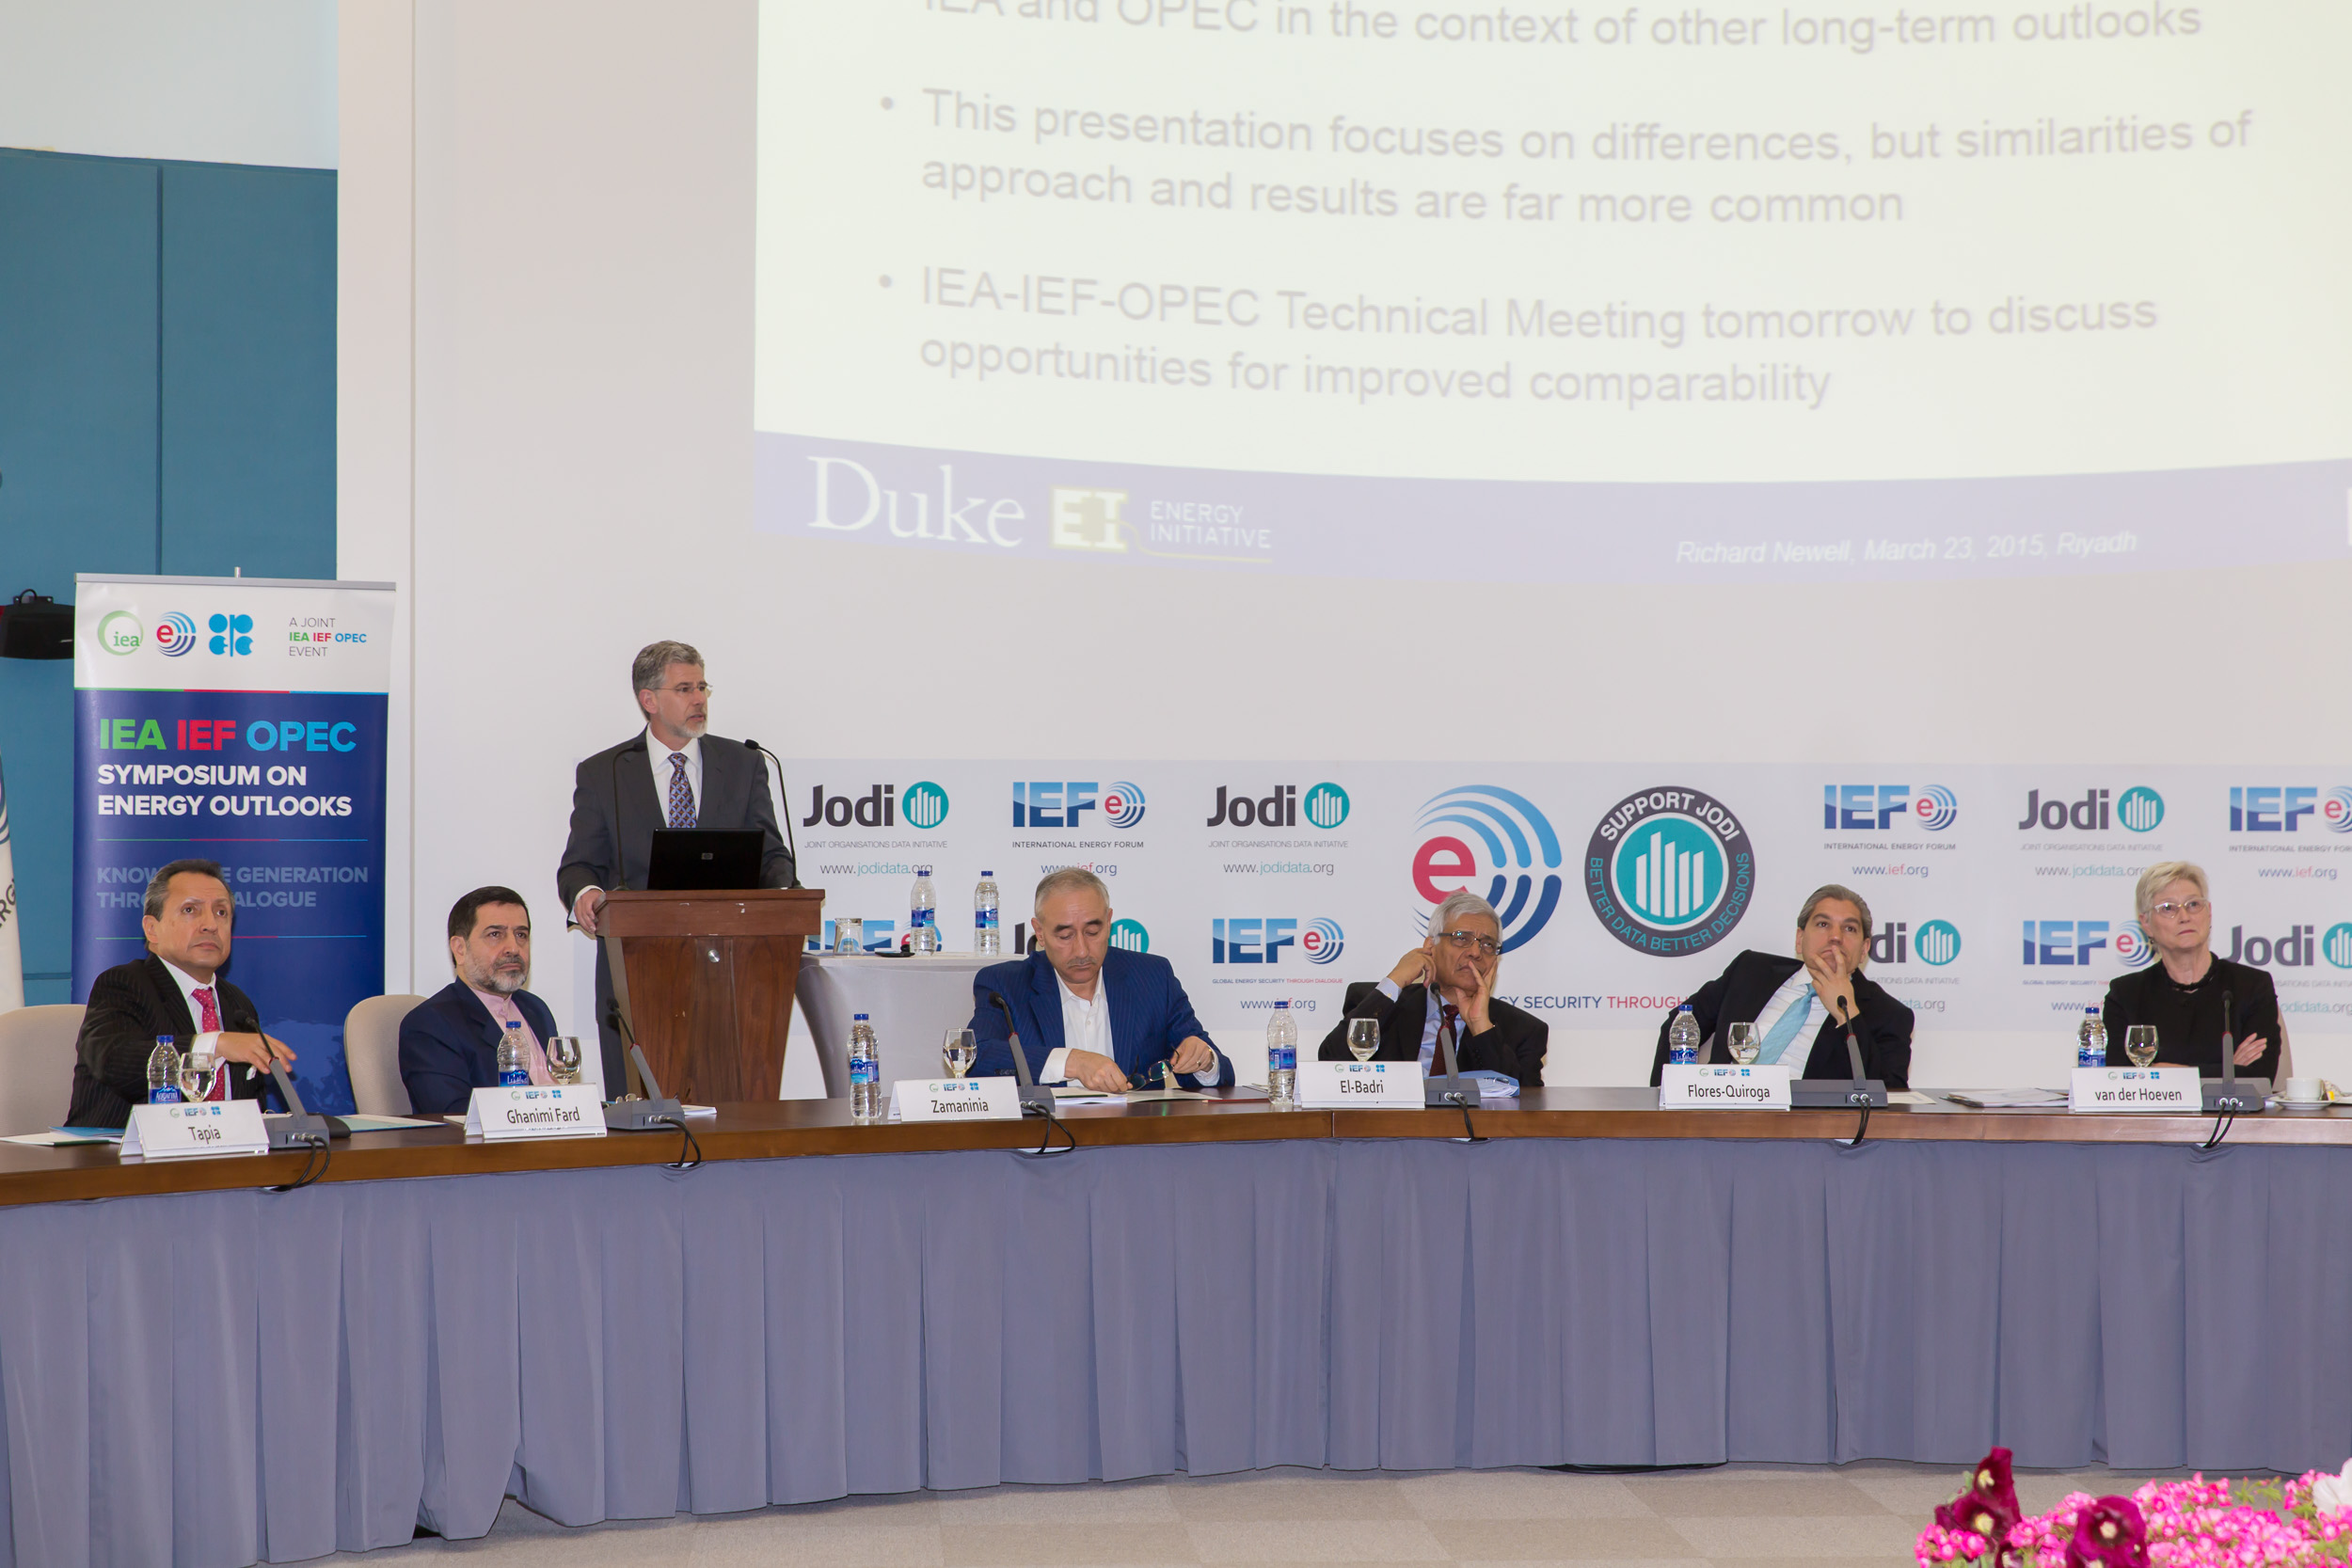 IEA IEF OPEC Symposium_21036